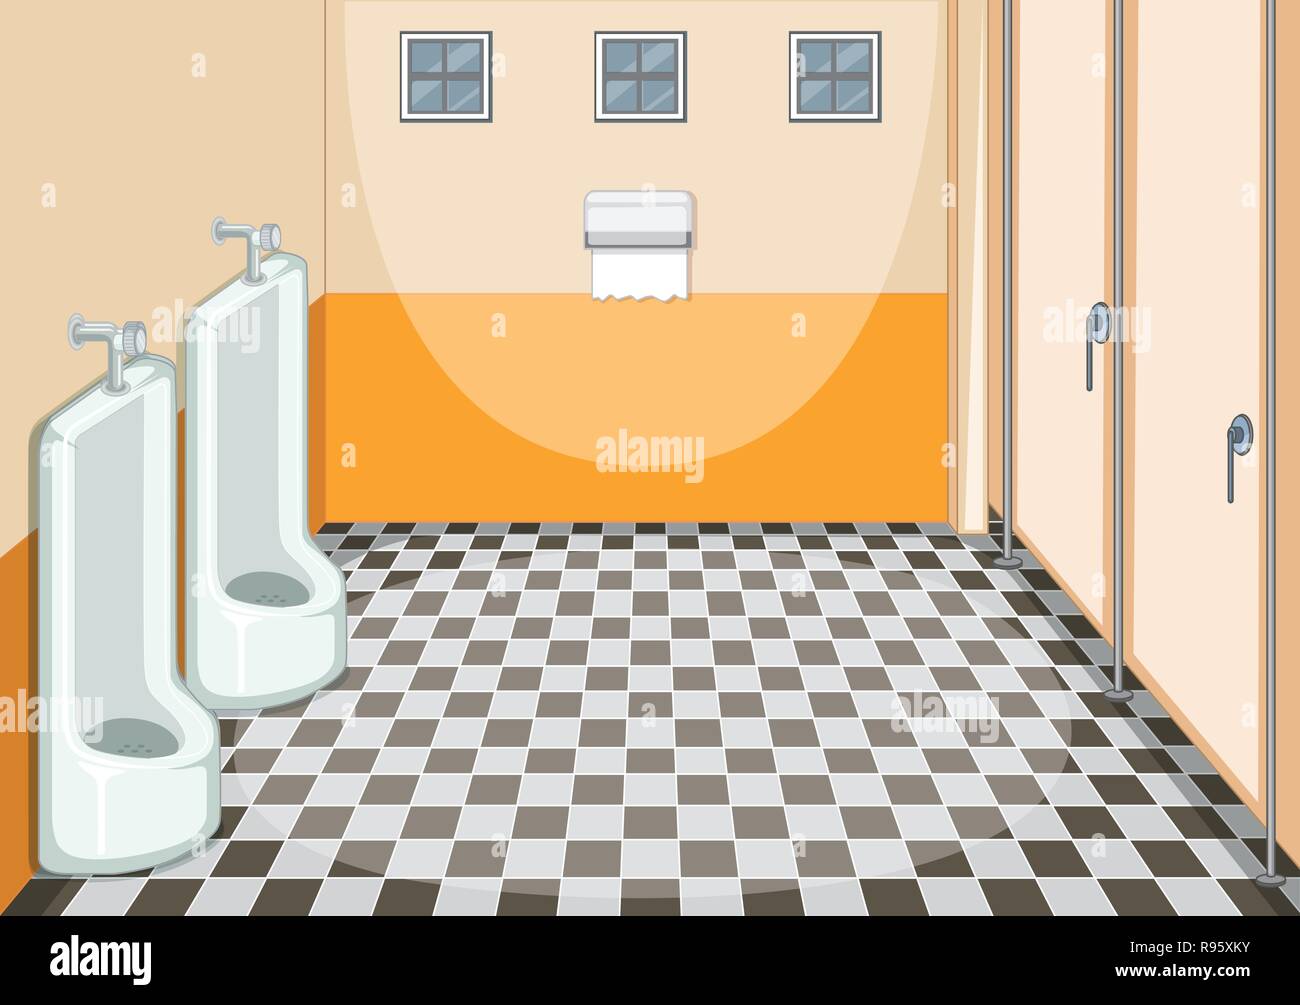 Interior design of male toilet illustration Stock Vector